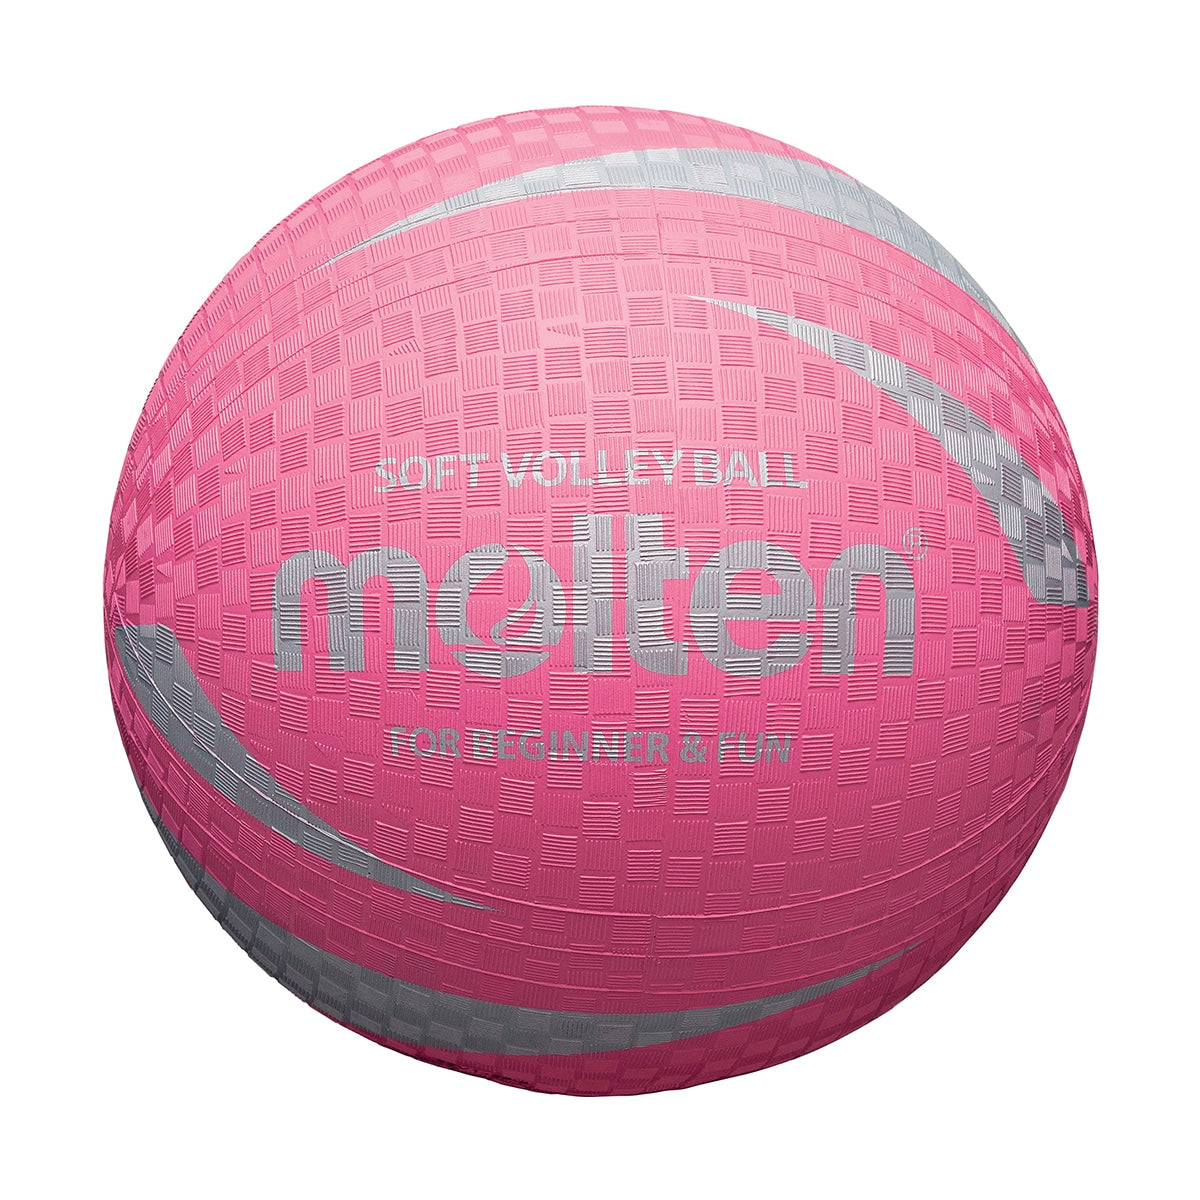 Molten Soft Rubber Volleyball - Pink